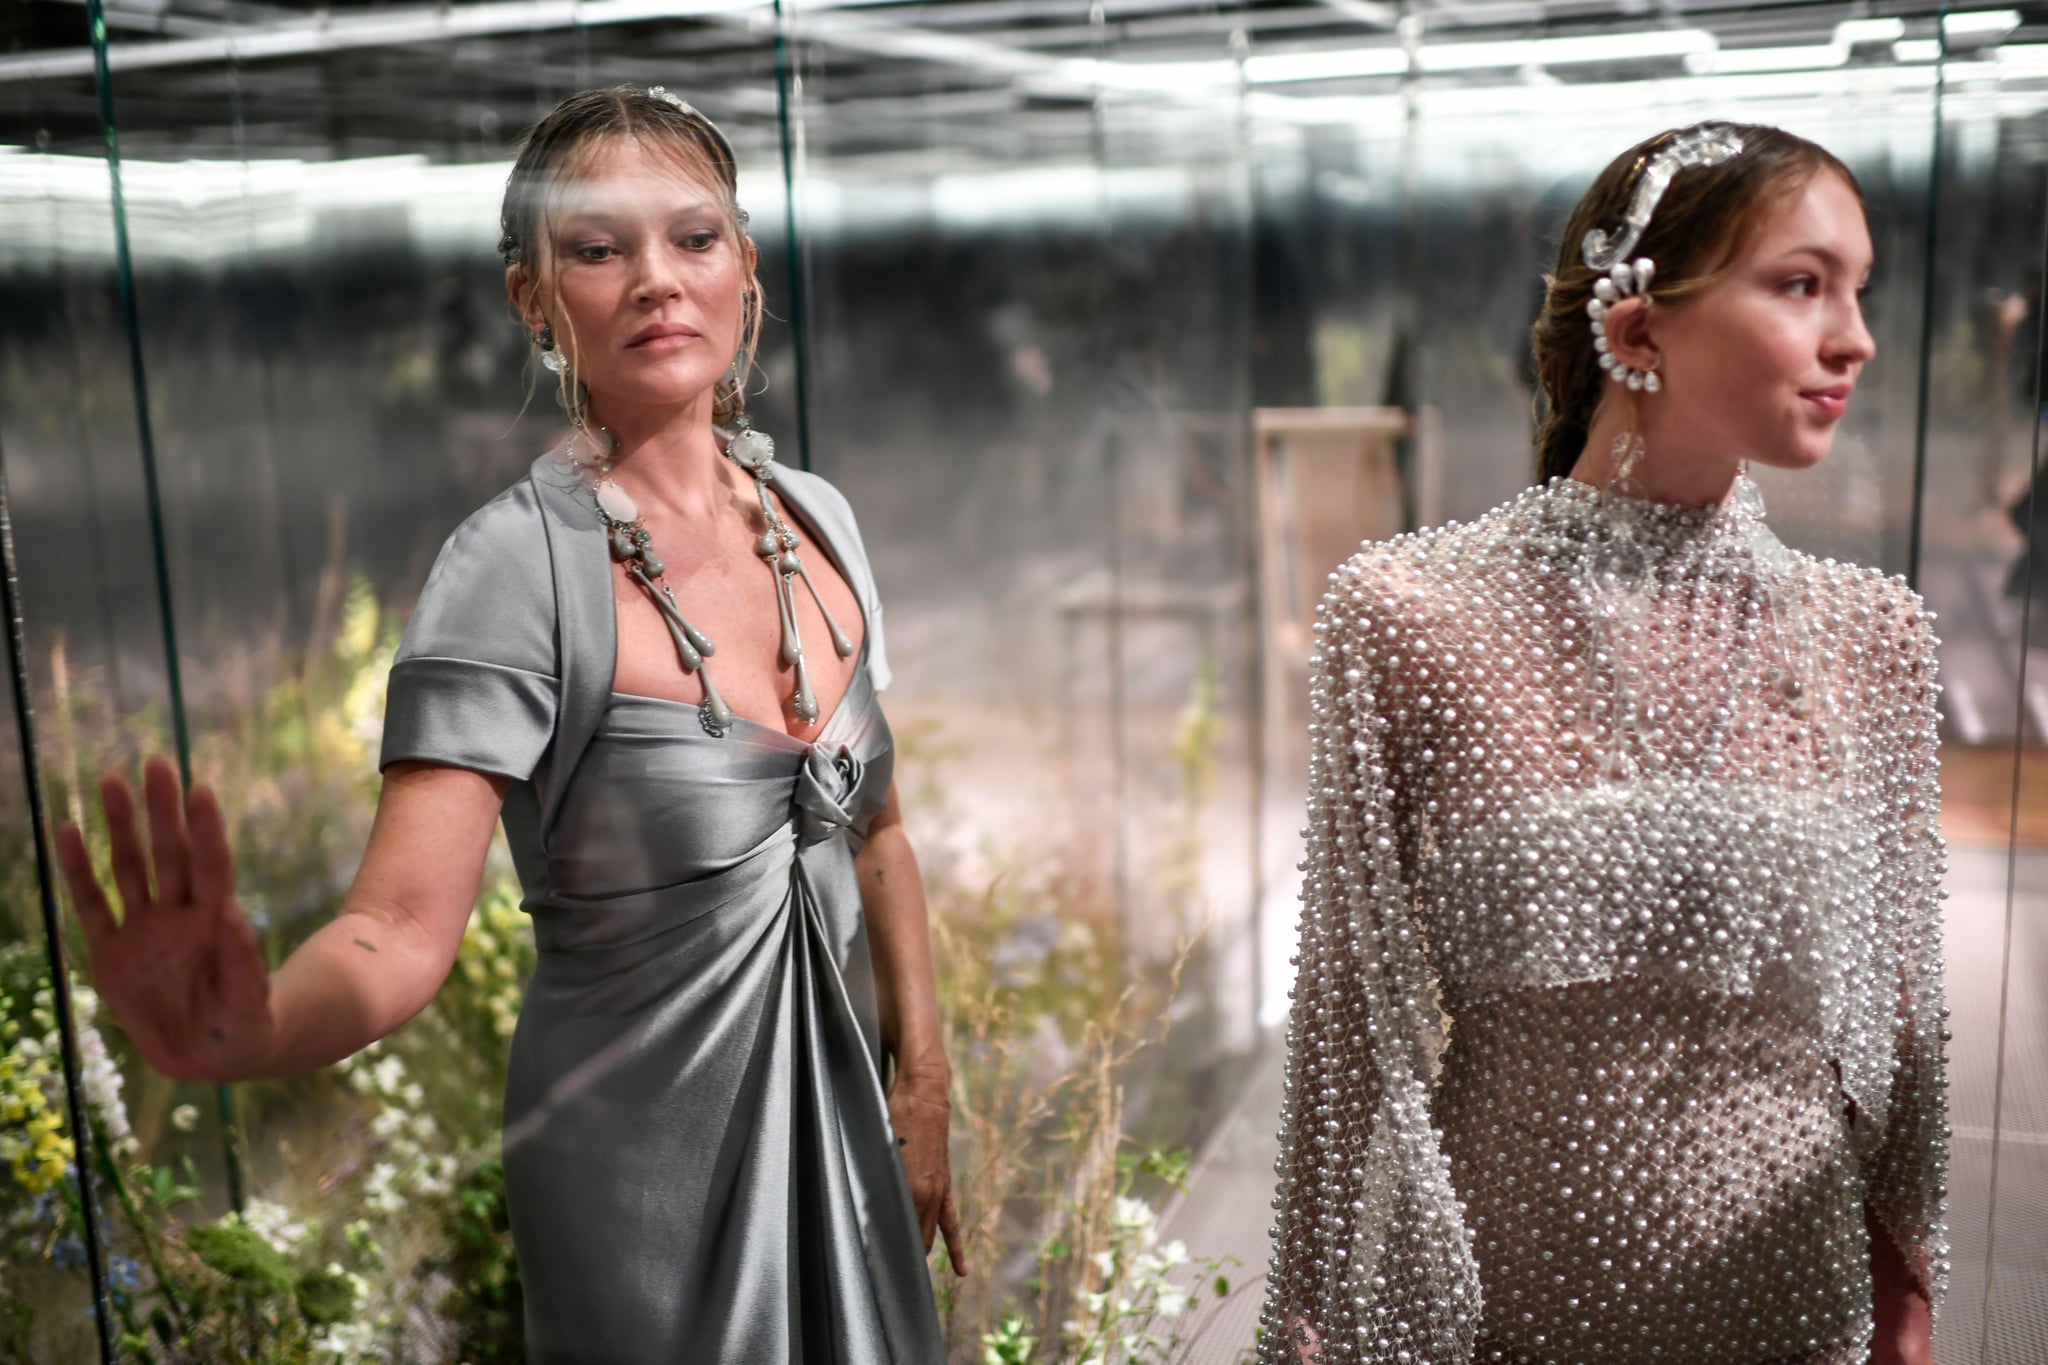 Kim Jones Fendi show: Kate Moss and daughter Lila grace catwalk, Fashion